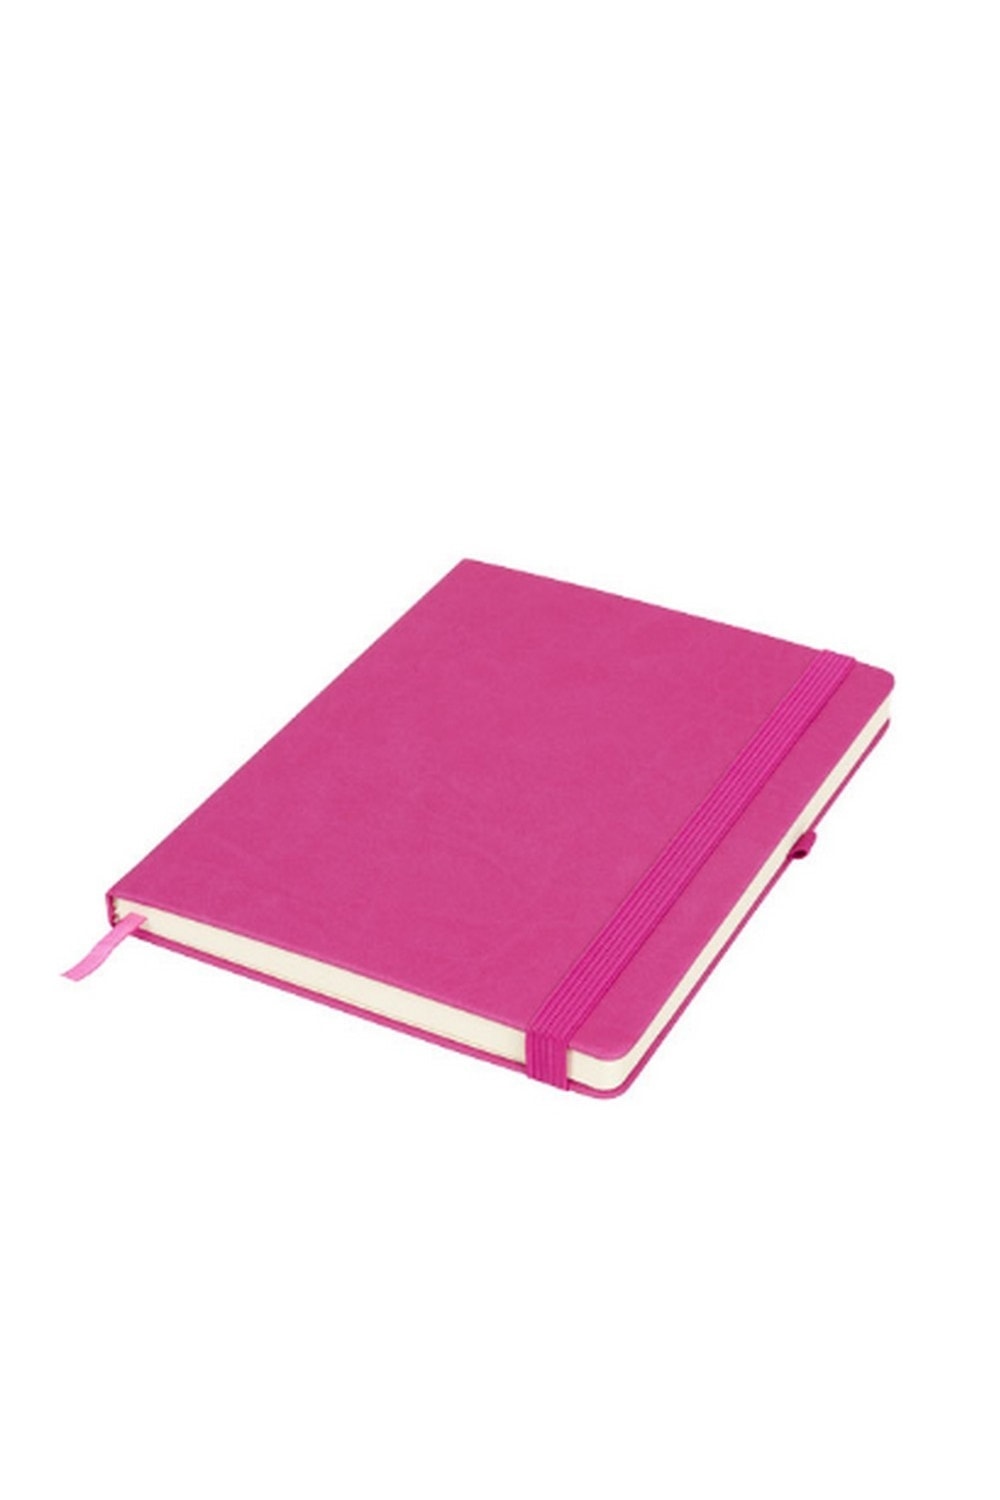 Rivista notebook large (Pink) (Medium)